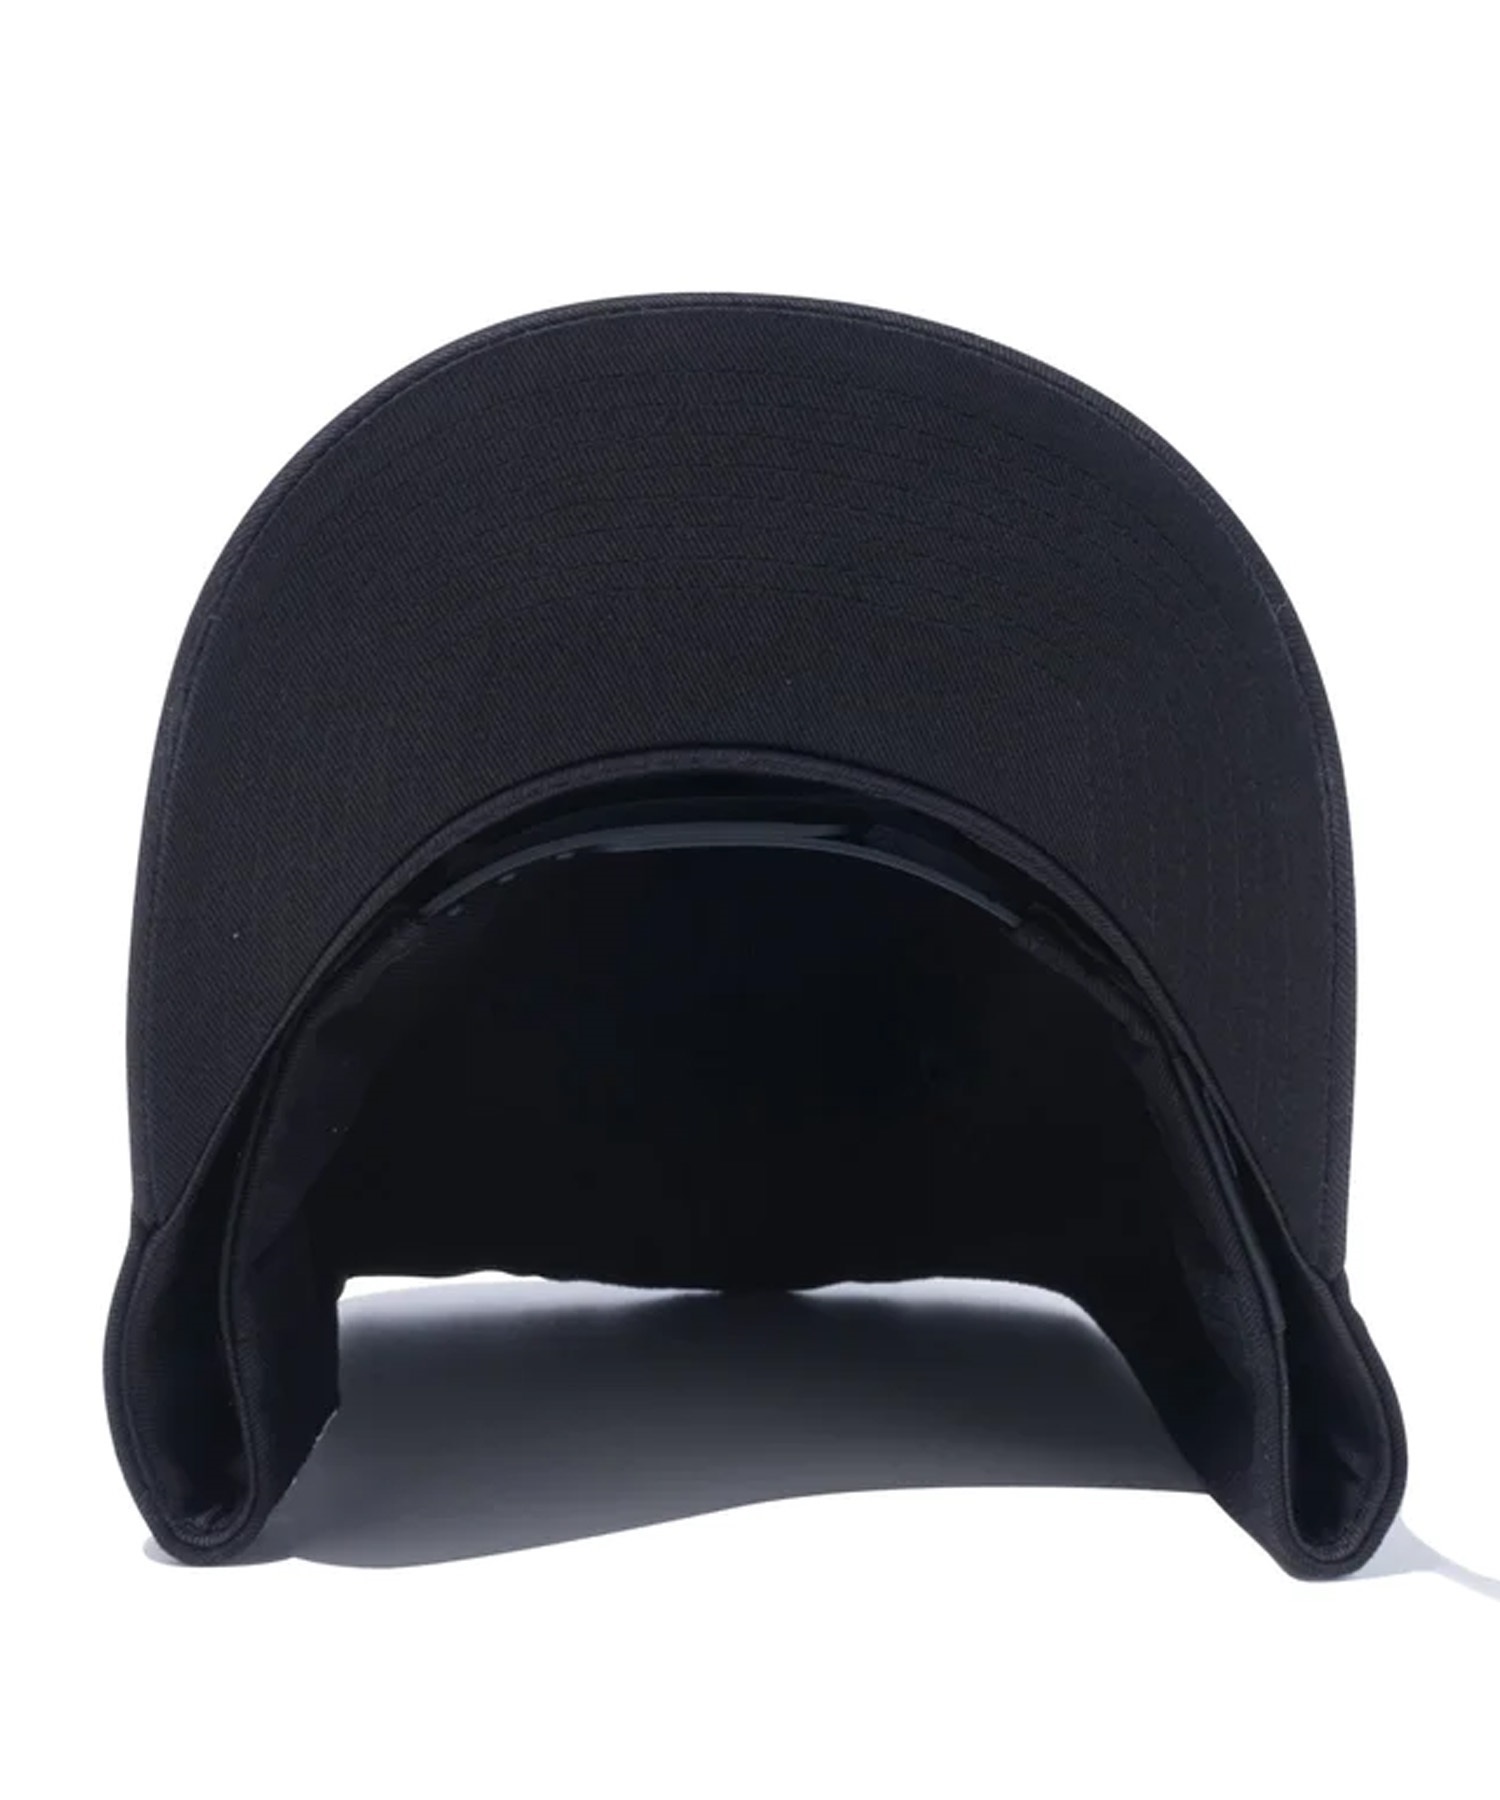 NEW ERA/ニューエラ 9FORTY A-Frame Black and White シカゴ・ホワイトソックス ブラック キャップ 帽子 9FORTYAF 13751001(BKWT-ONESIZE)